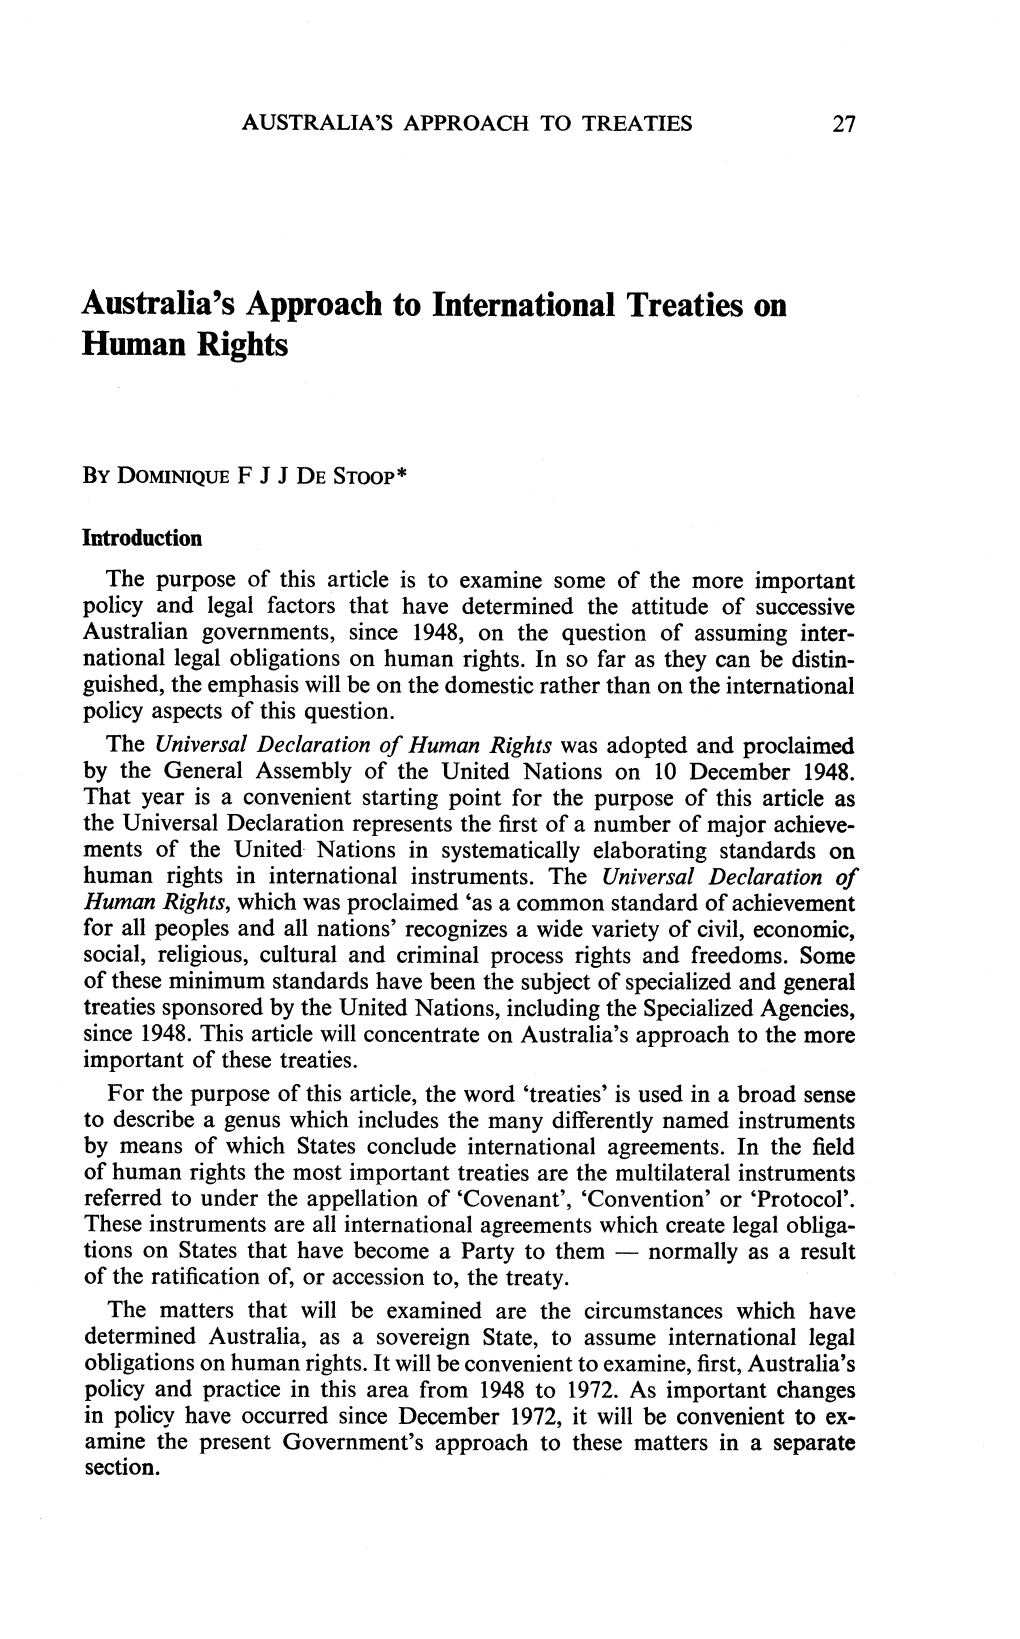 Australia's Approach to International Treaties on Human Rights